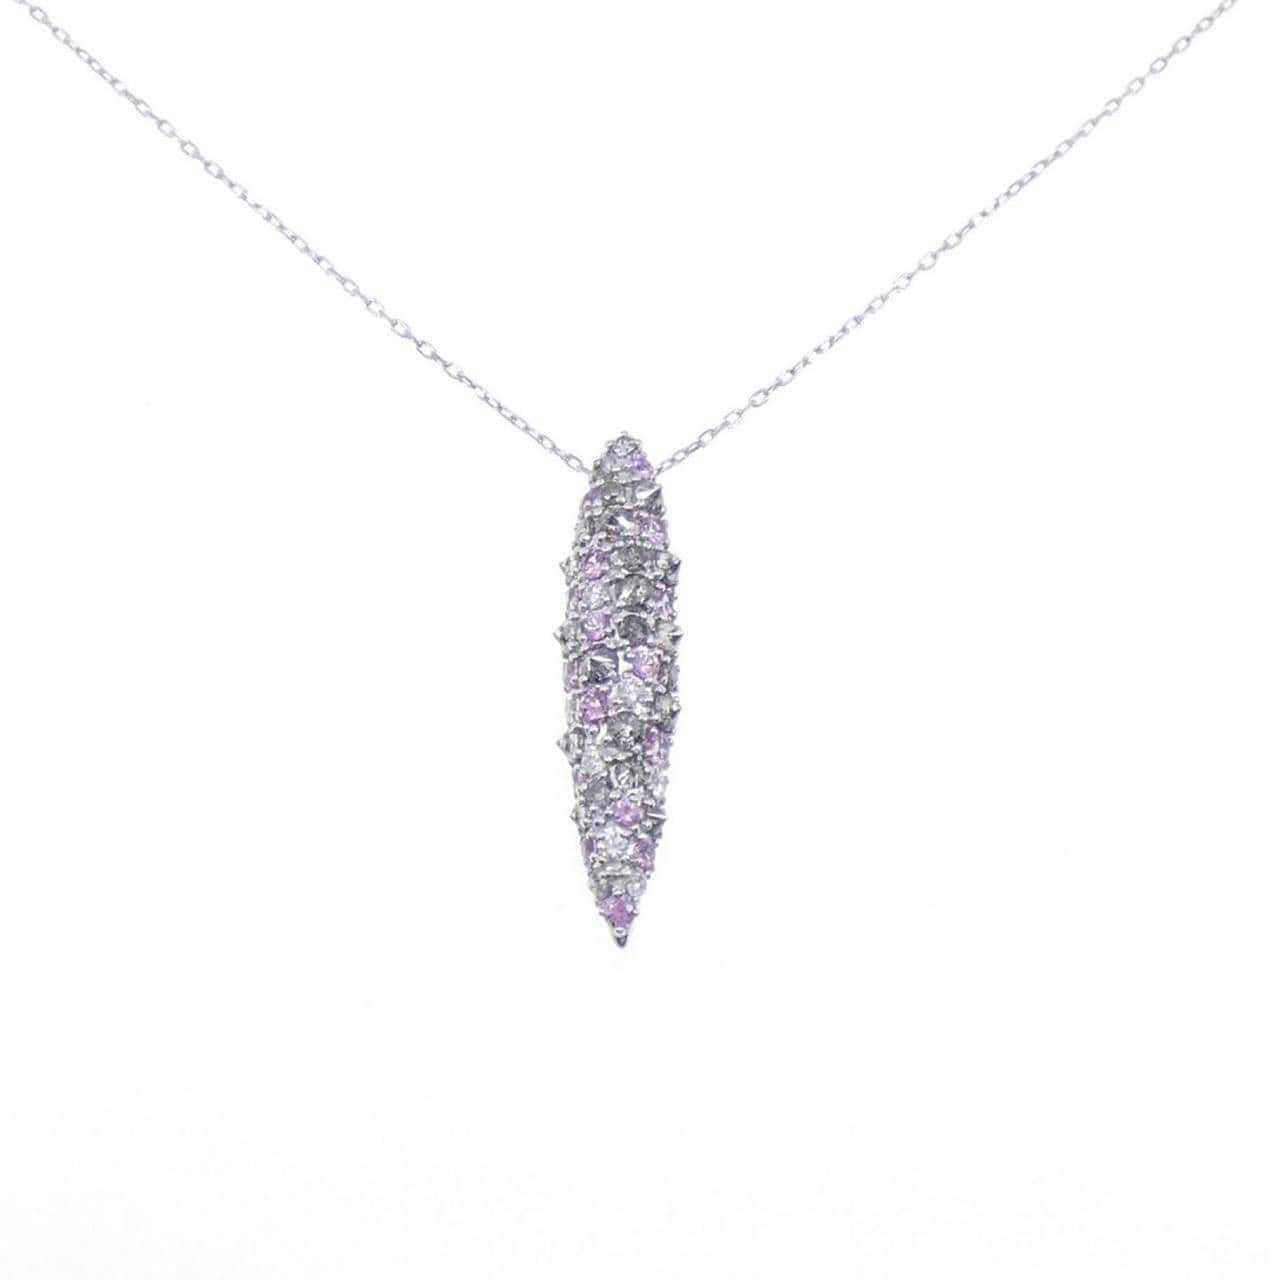 Tasaki sapphire necklace